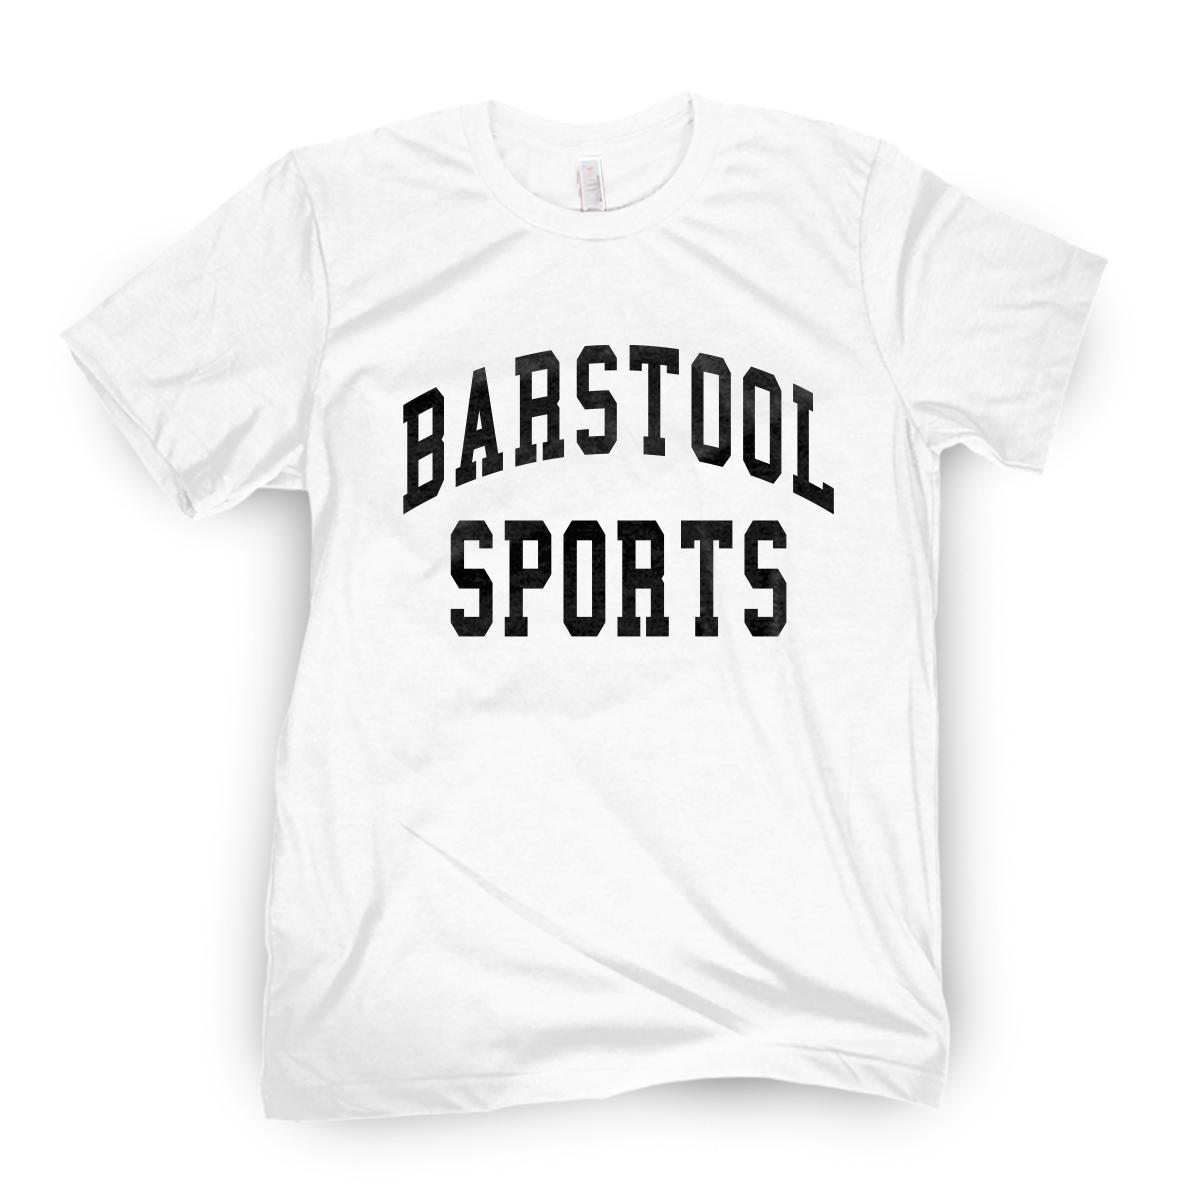 Barstool Sports Tee-T-Shirts-Barstool Sports-White-S-Barstool Sports